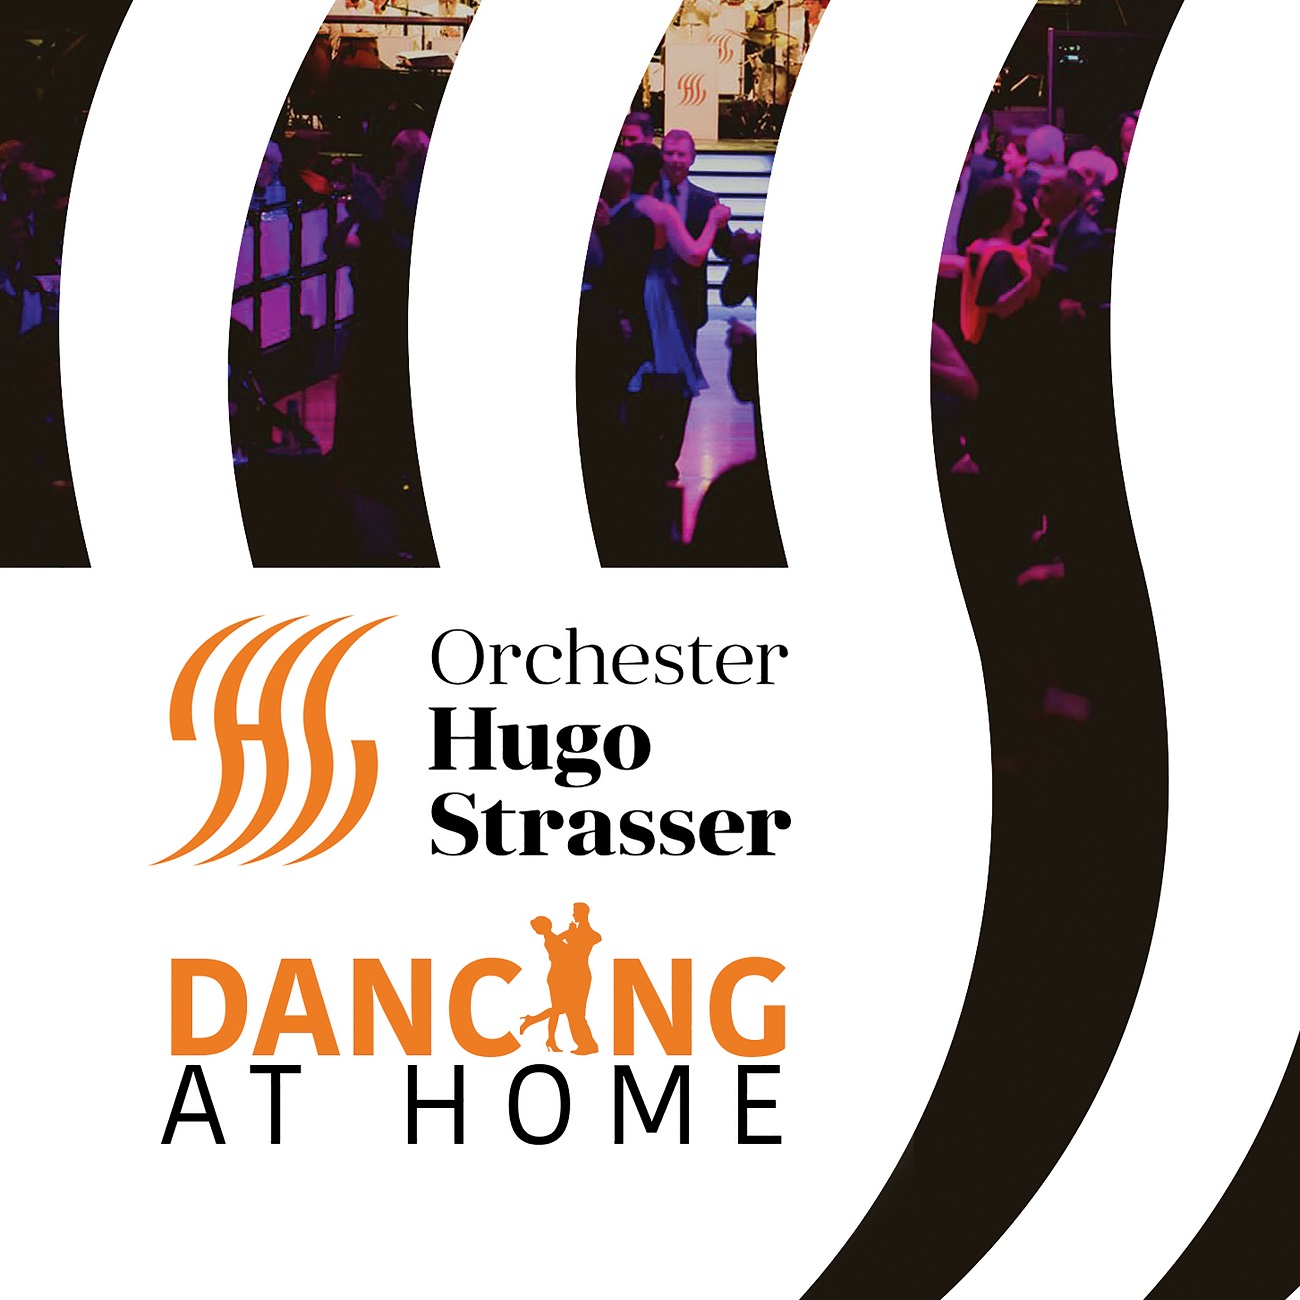 Orchester Hugo Strasser - Dancing at home - Cover.jpg